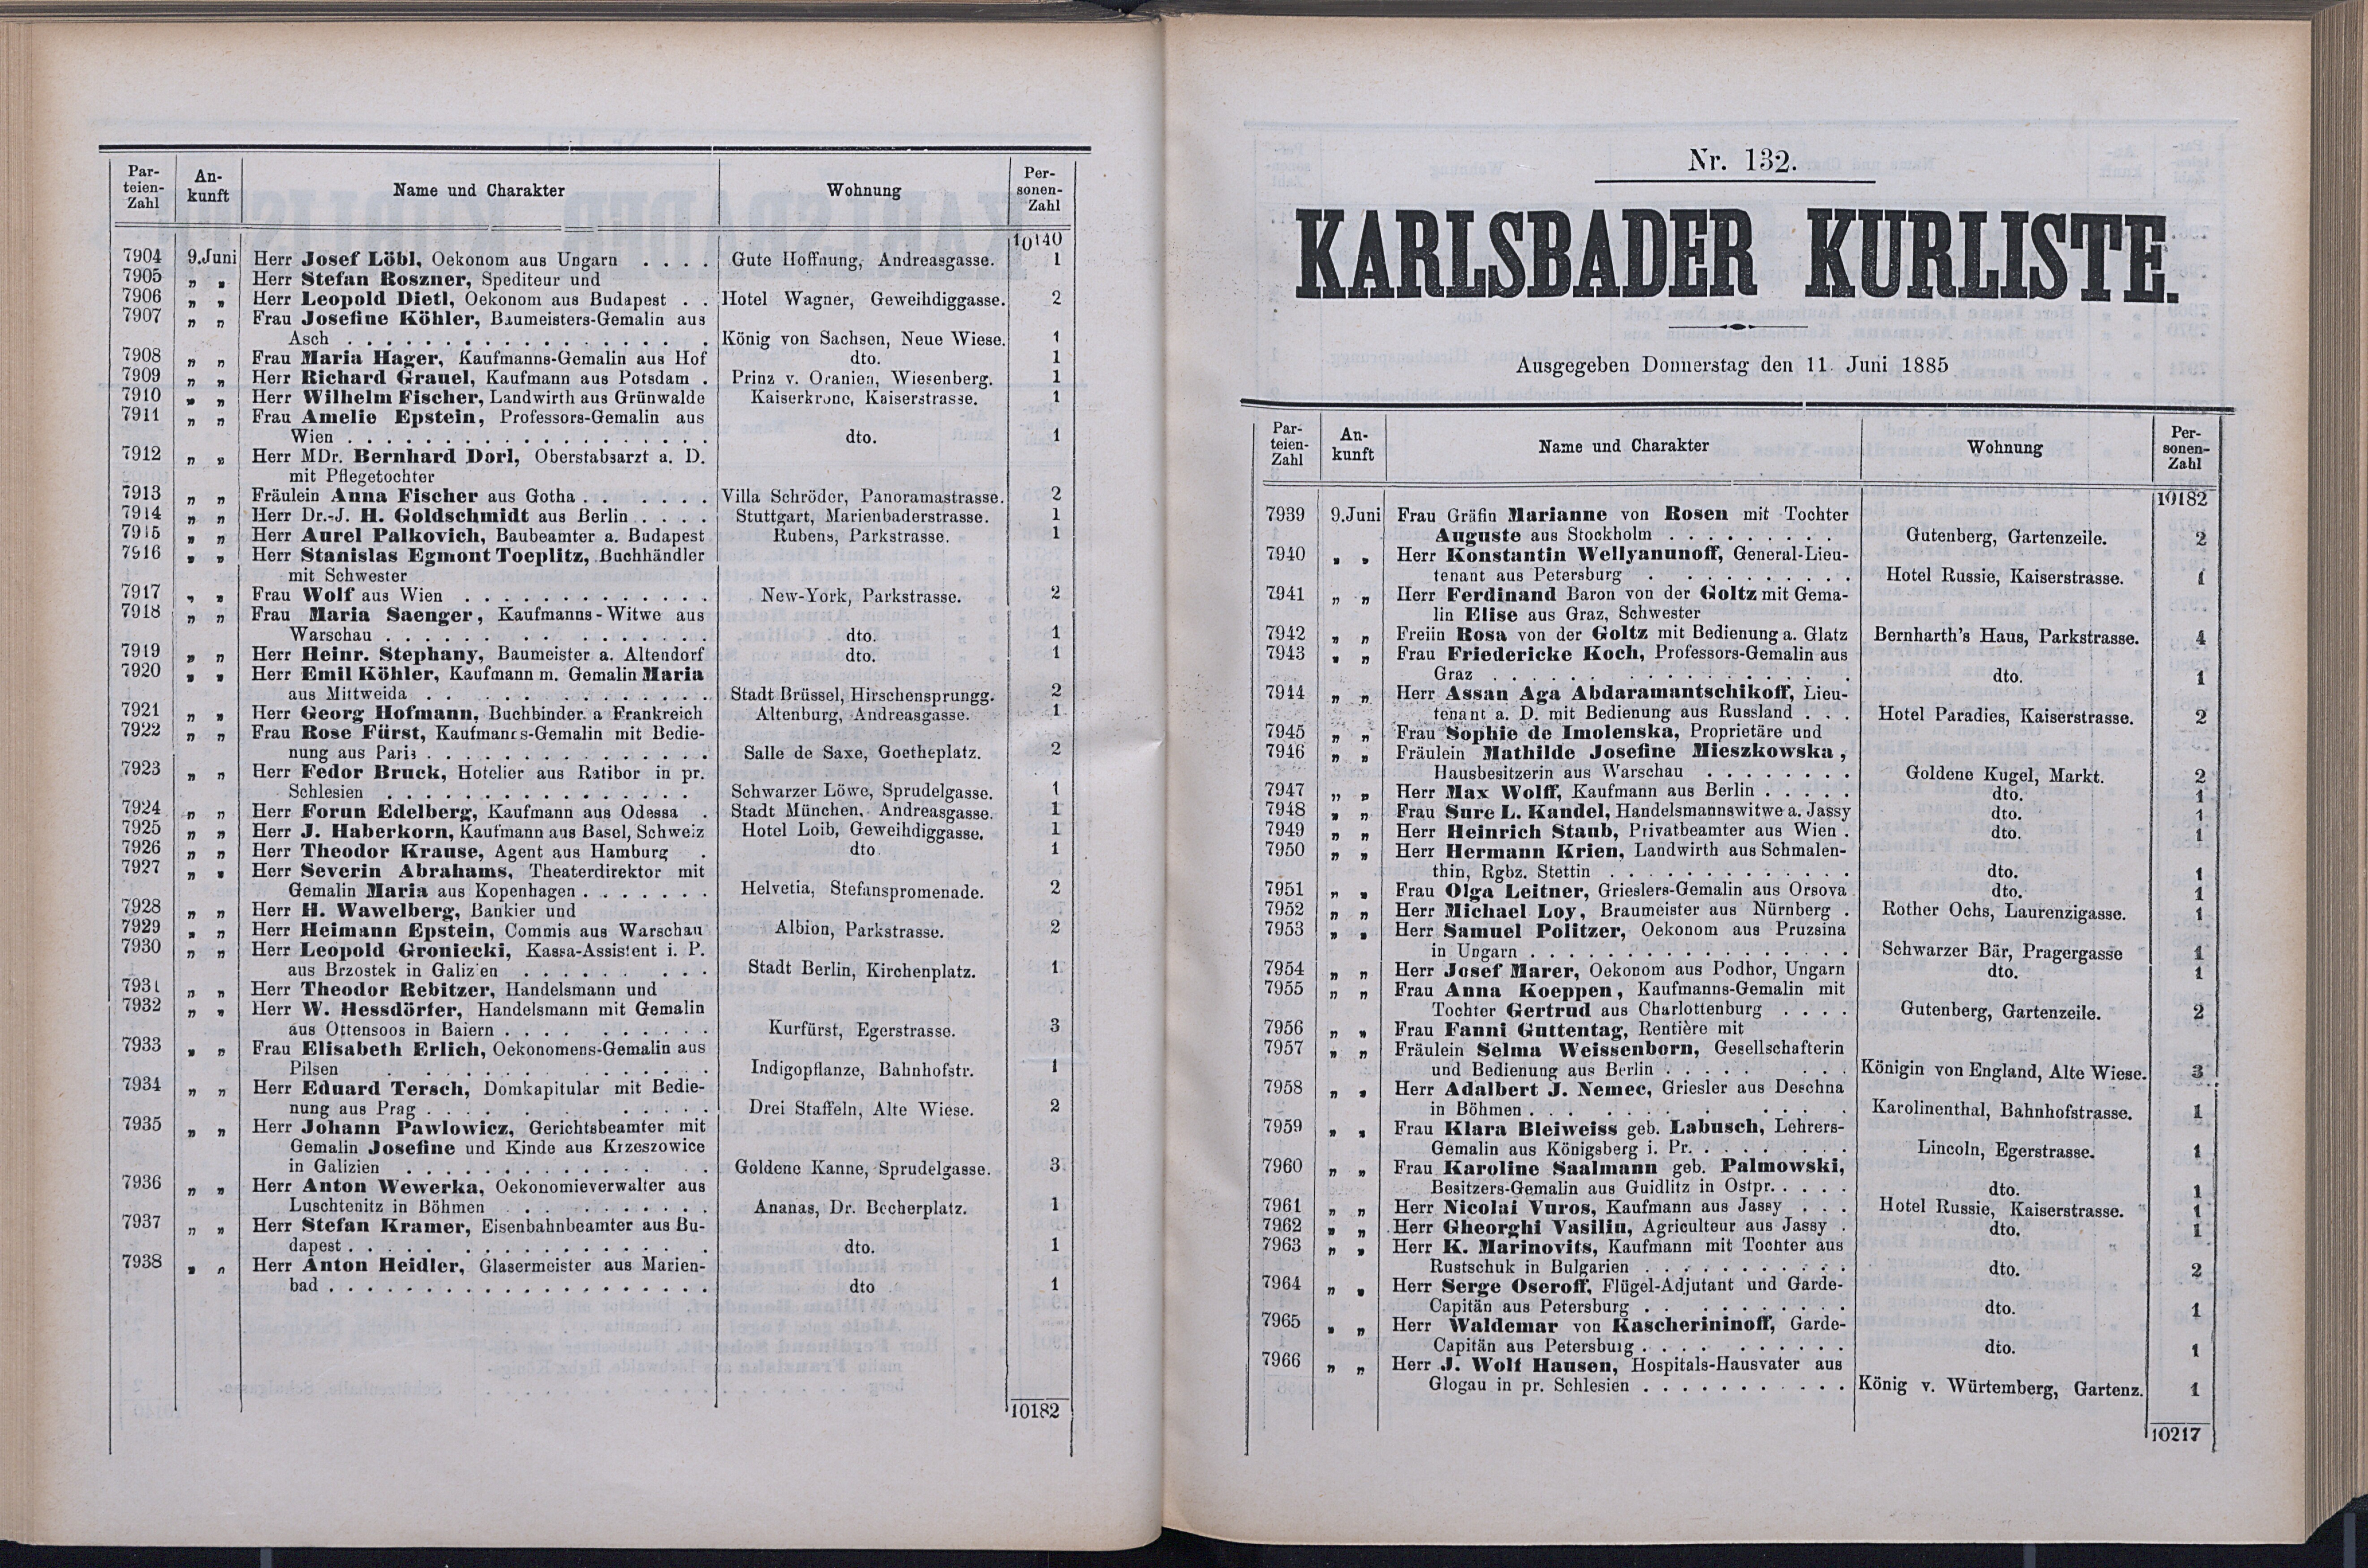 184. soap-kv_knihovna_karlsbader-kurliste-1885_1850